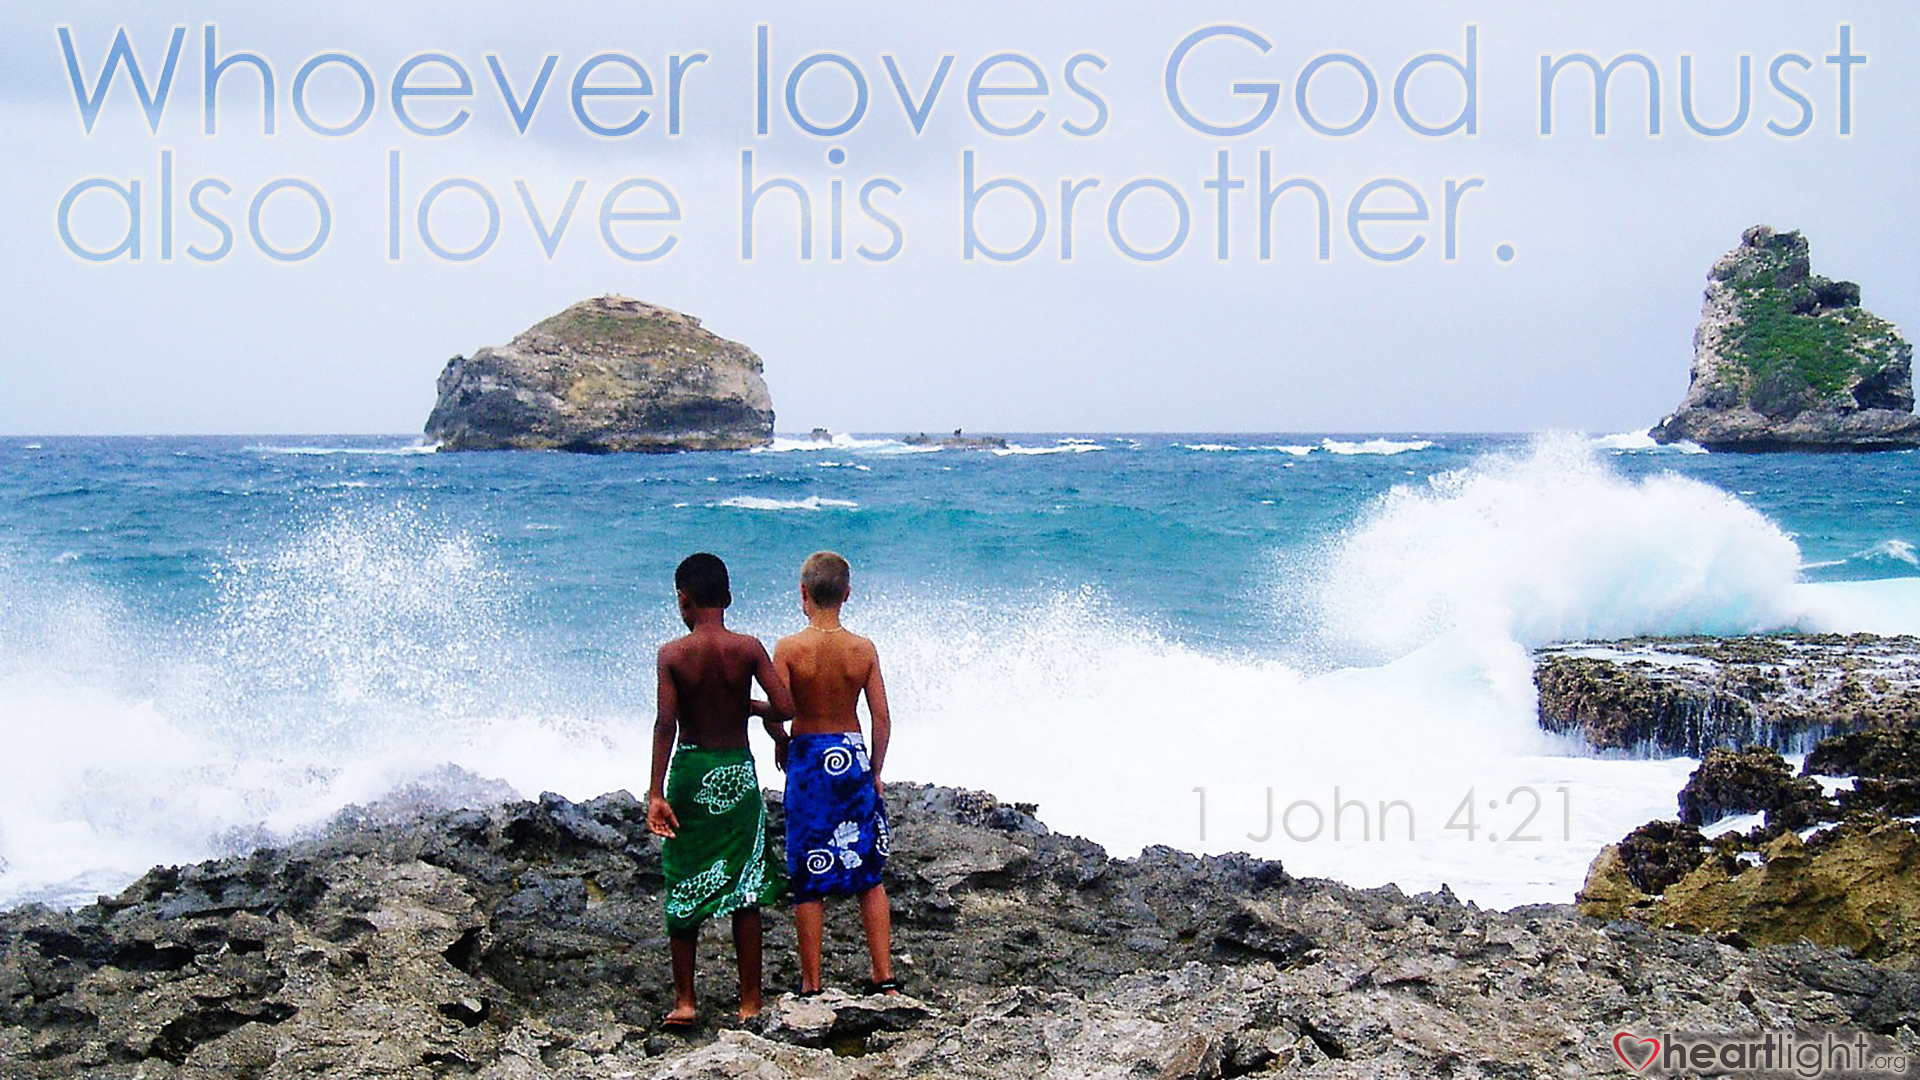 Illustration of 1 John 4:21 on Brotherhood